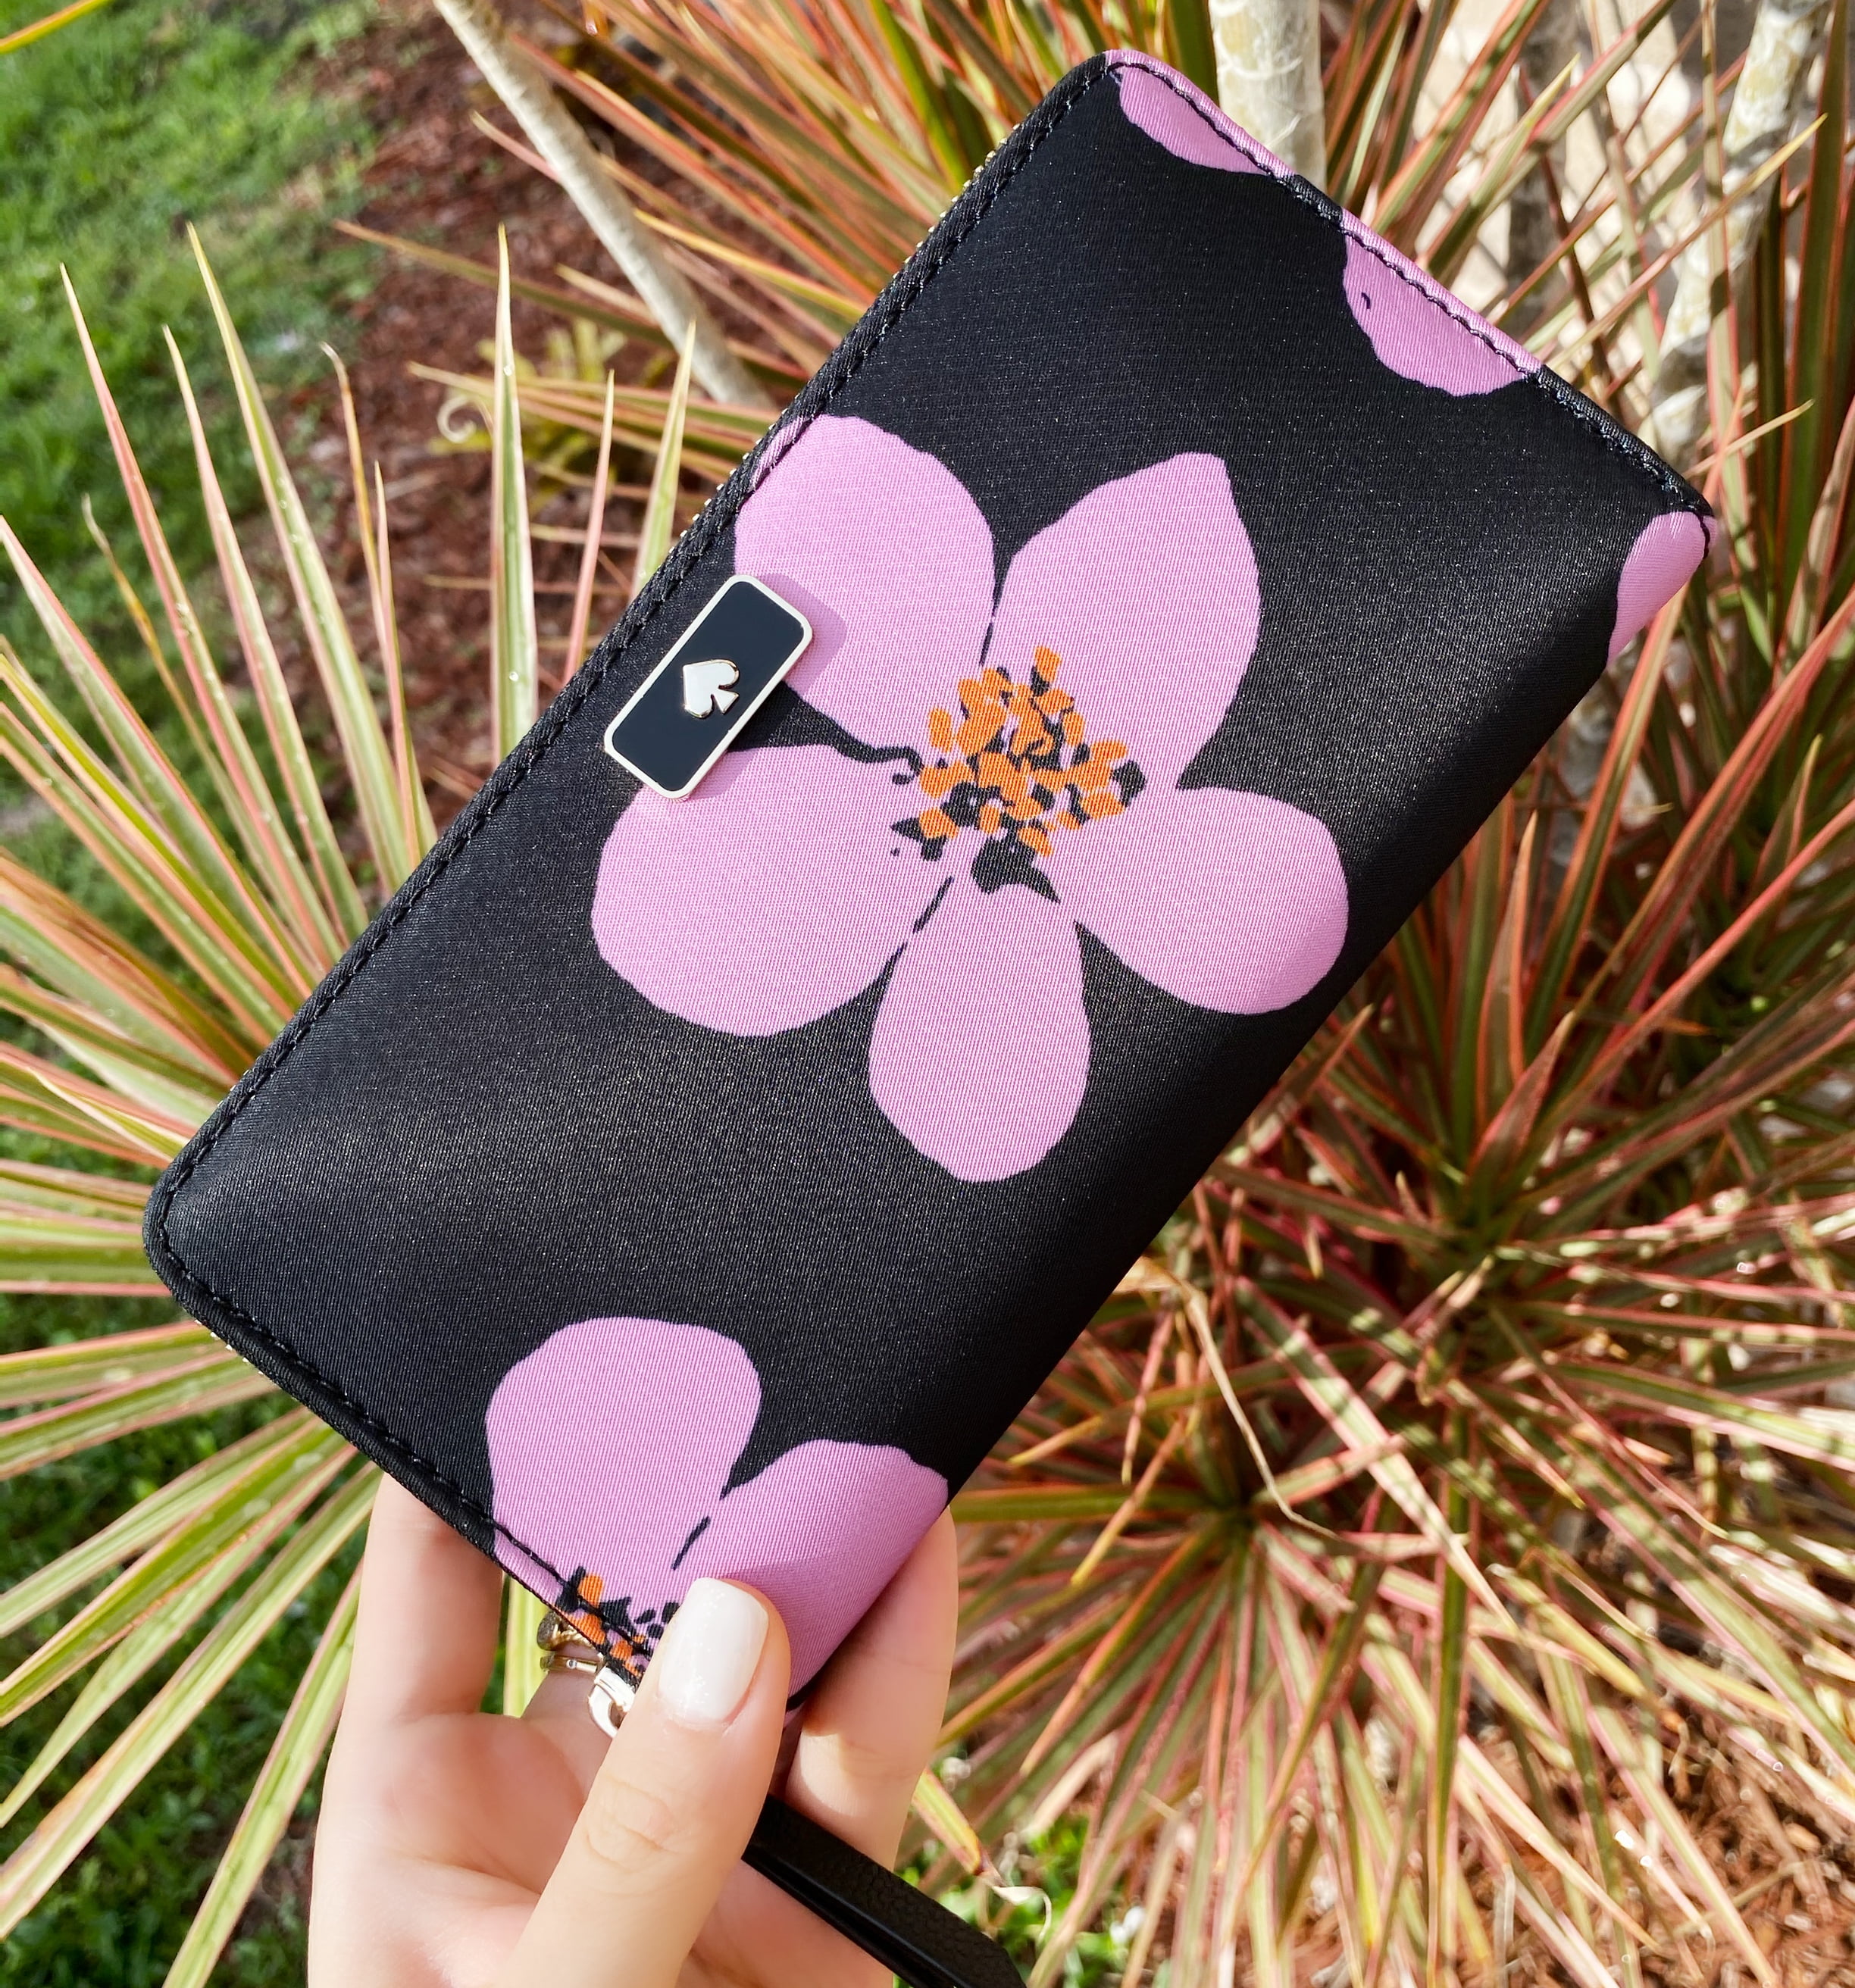 Kate Spade Dawn Grand Flora Neda Zip Around Continental Wallet Black Pink  Floral